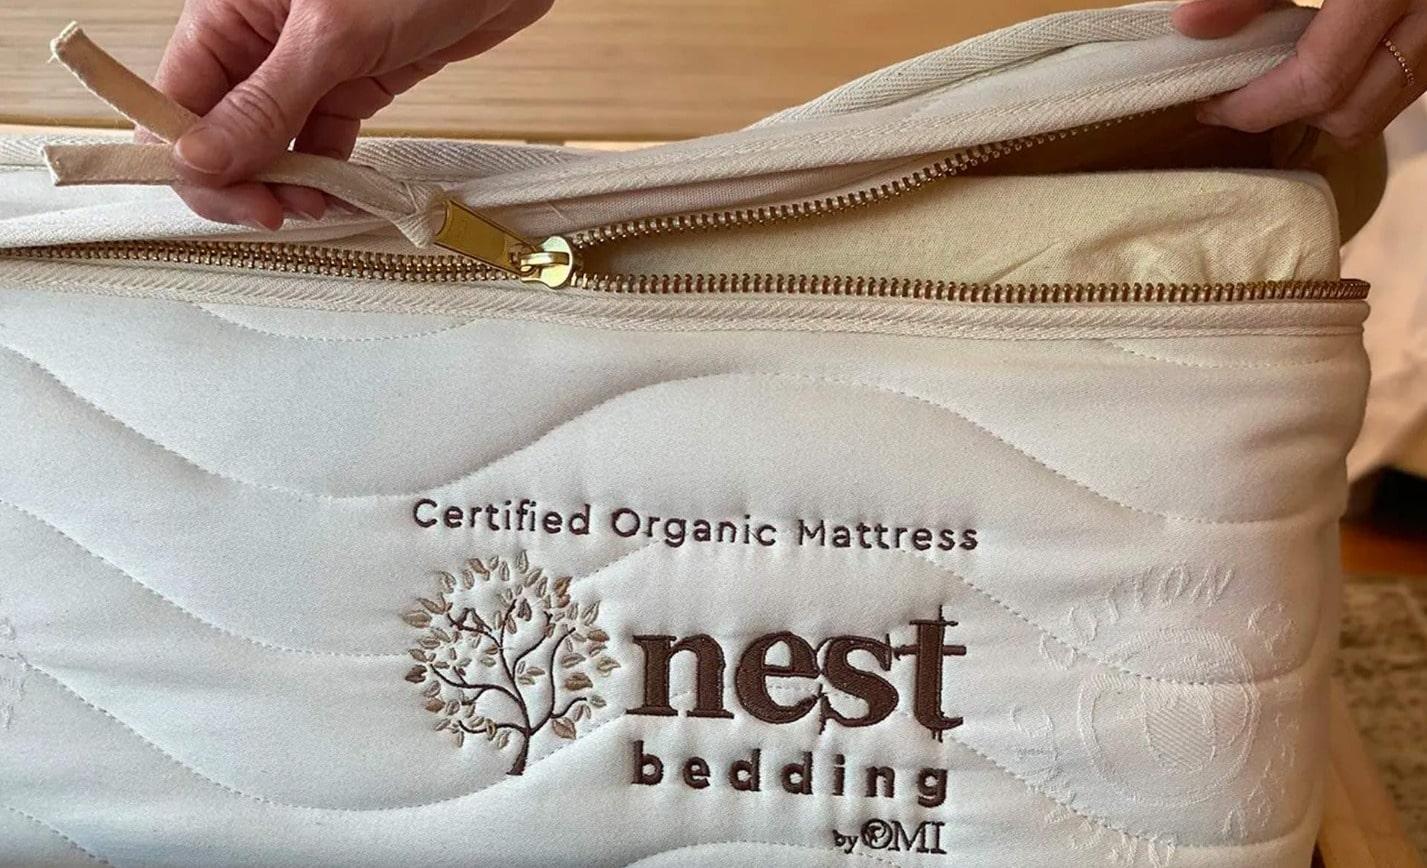 best nest bedding mattress